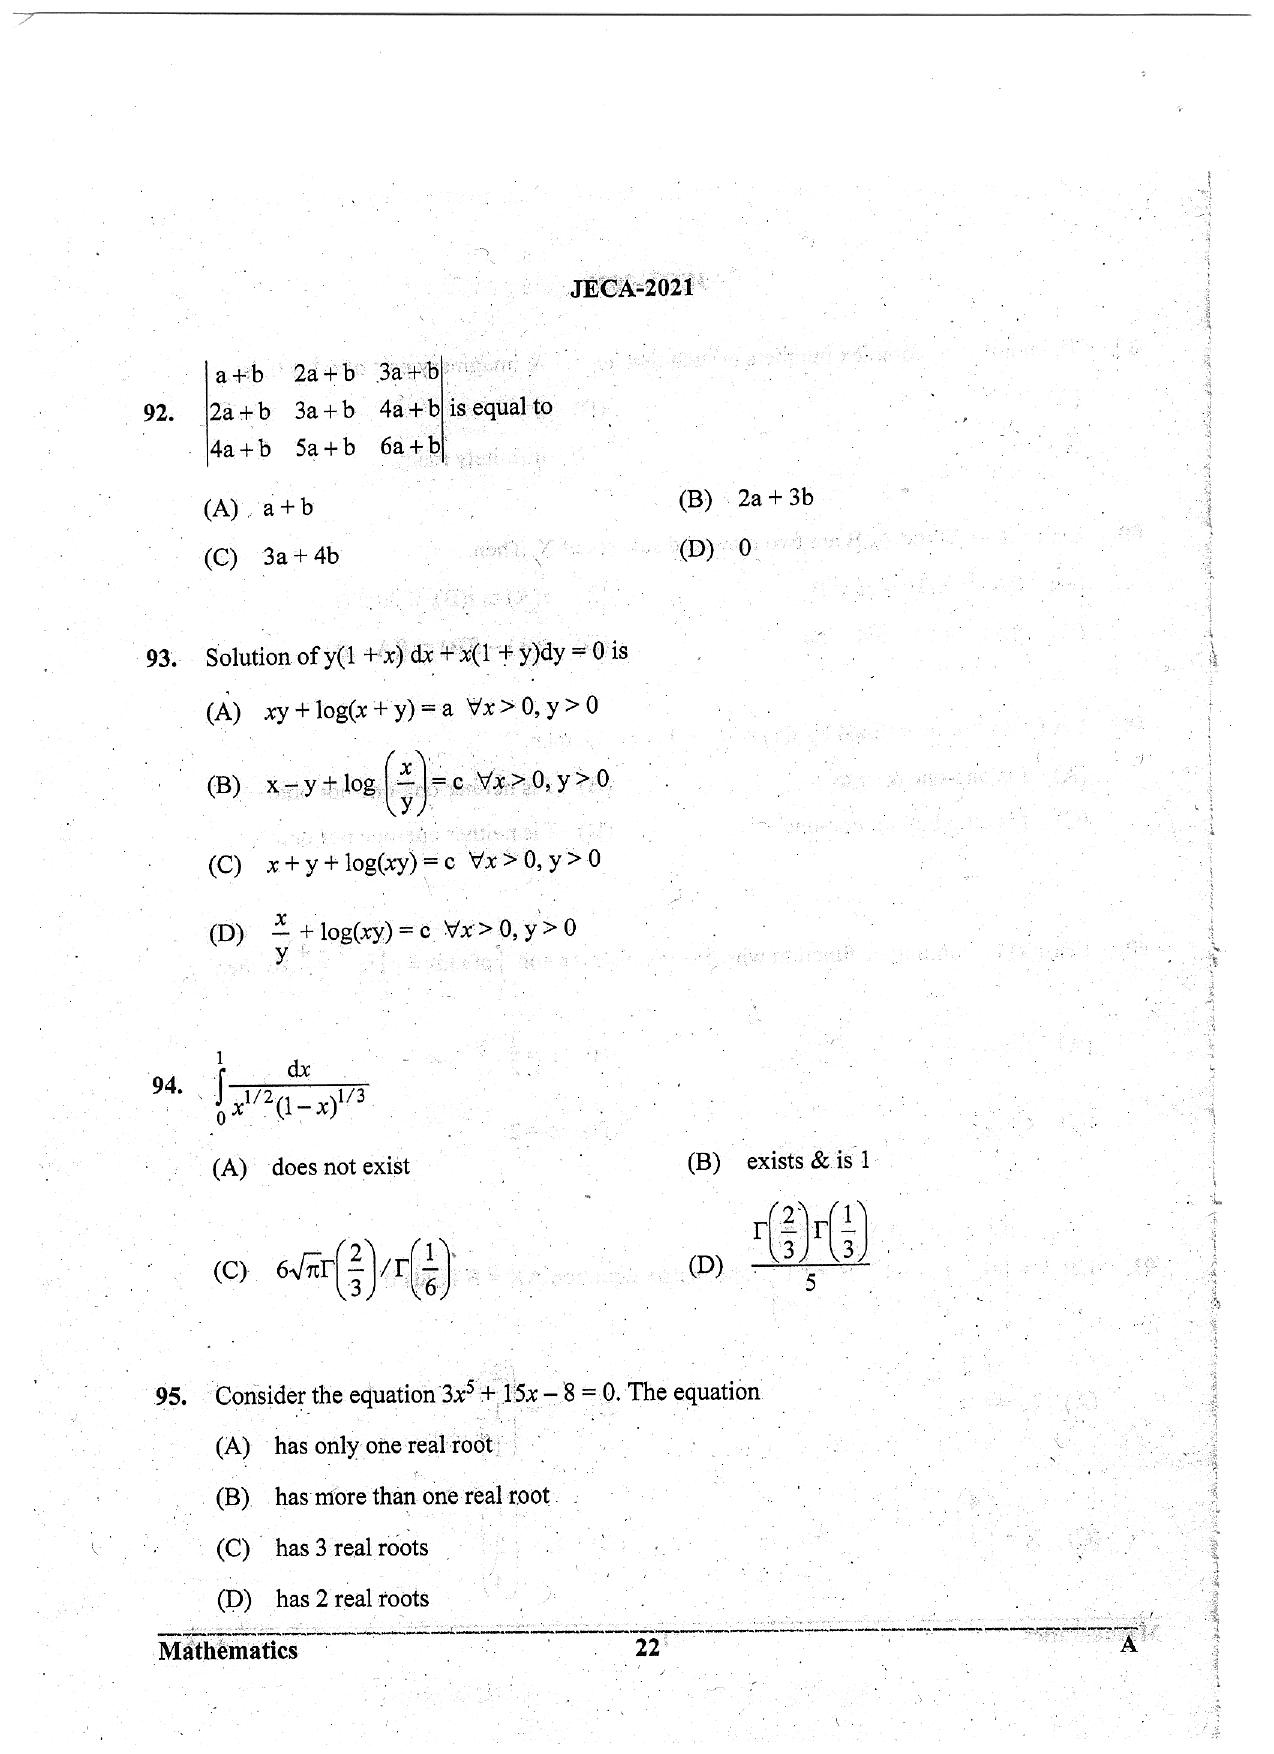 WB JECA 2021 Mathematics Question Paper - Page 22